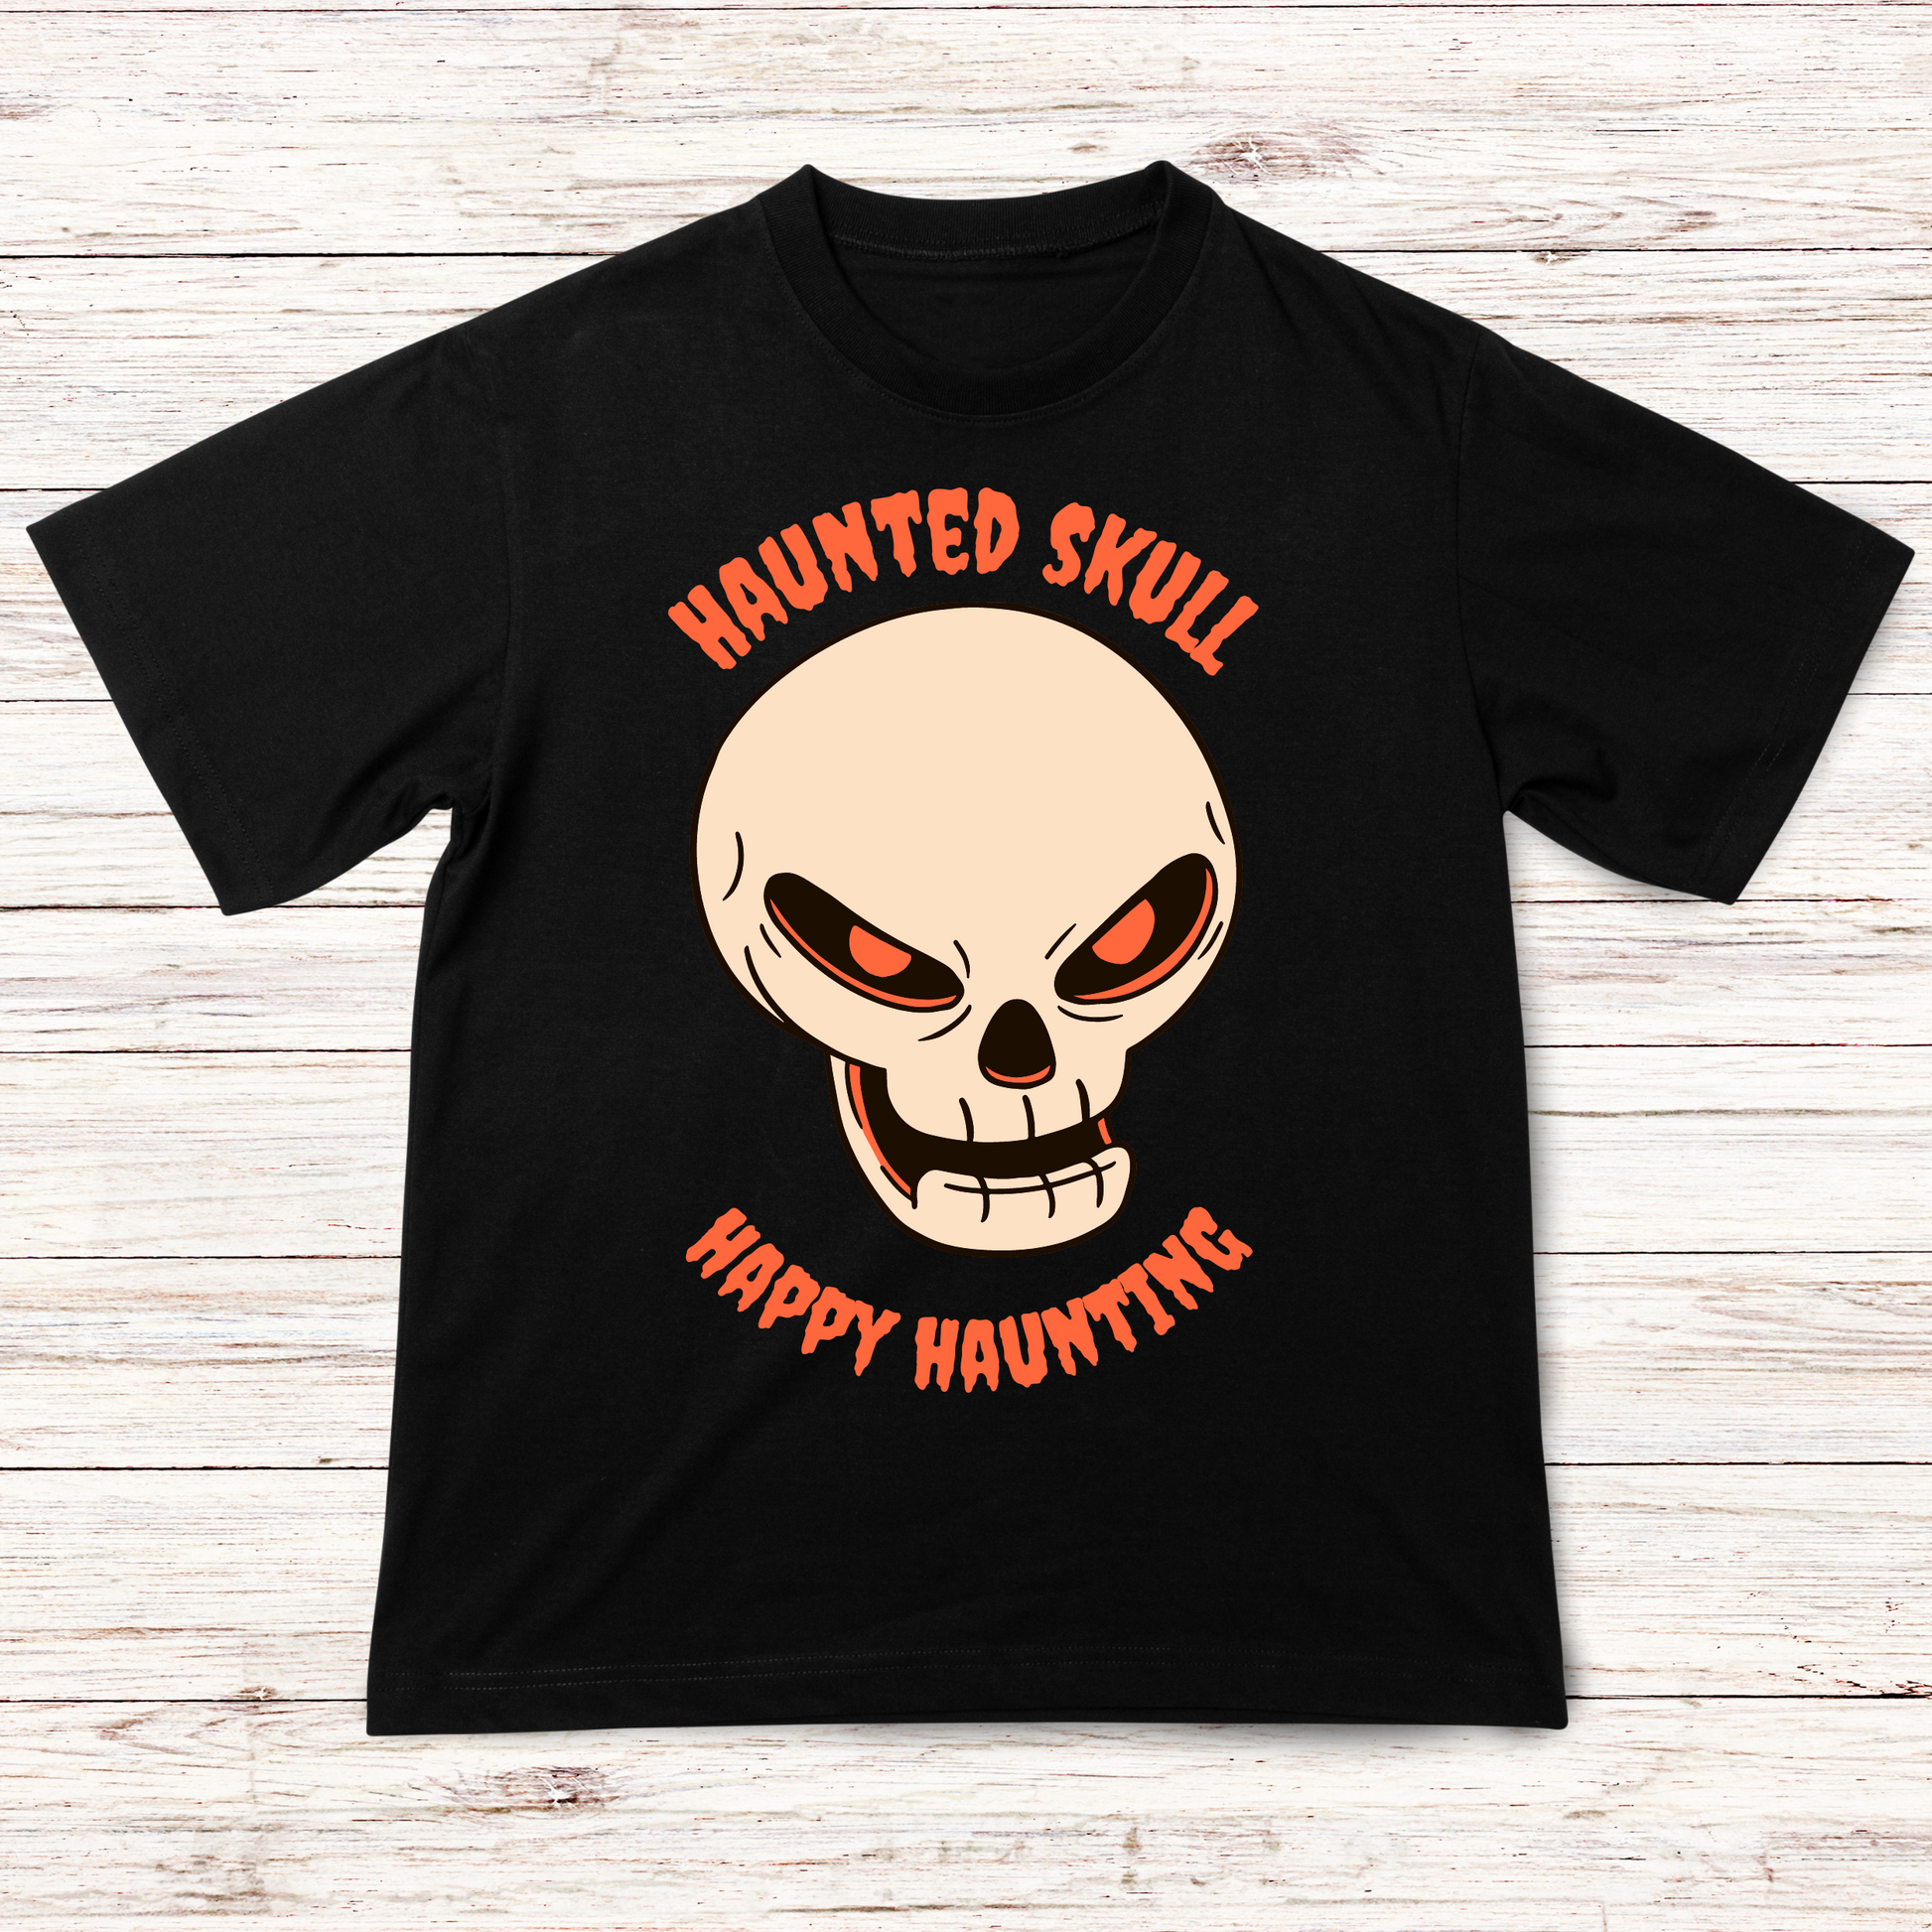 Haunted skull art Men's t-shirt - skeleton shirt - Premium t-shirt from Lees Krazy Teez - Just $21.95! Shop now at Lees Krazy Teez